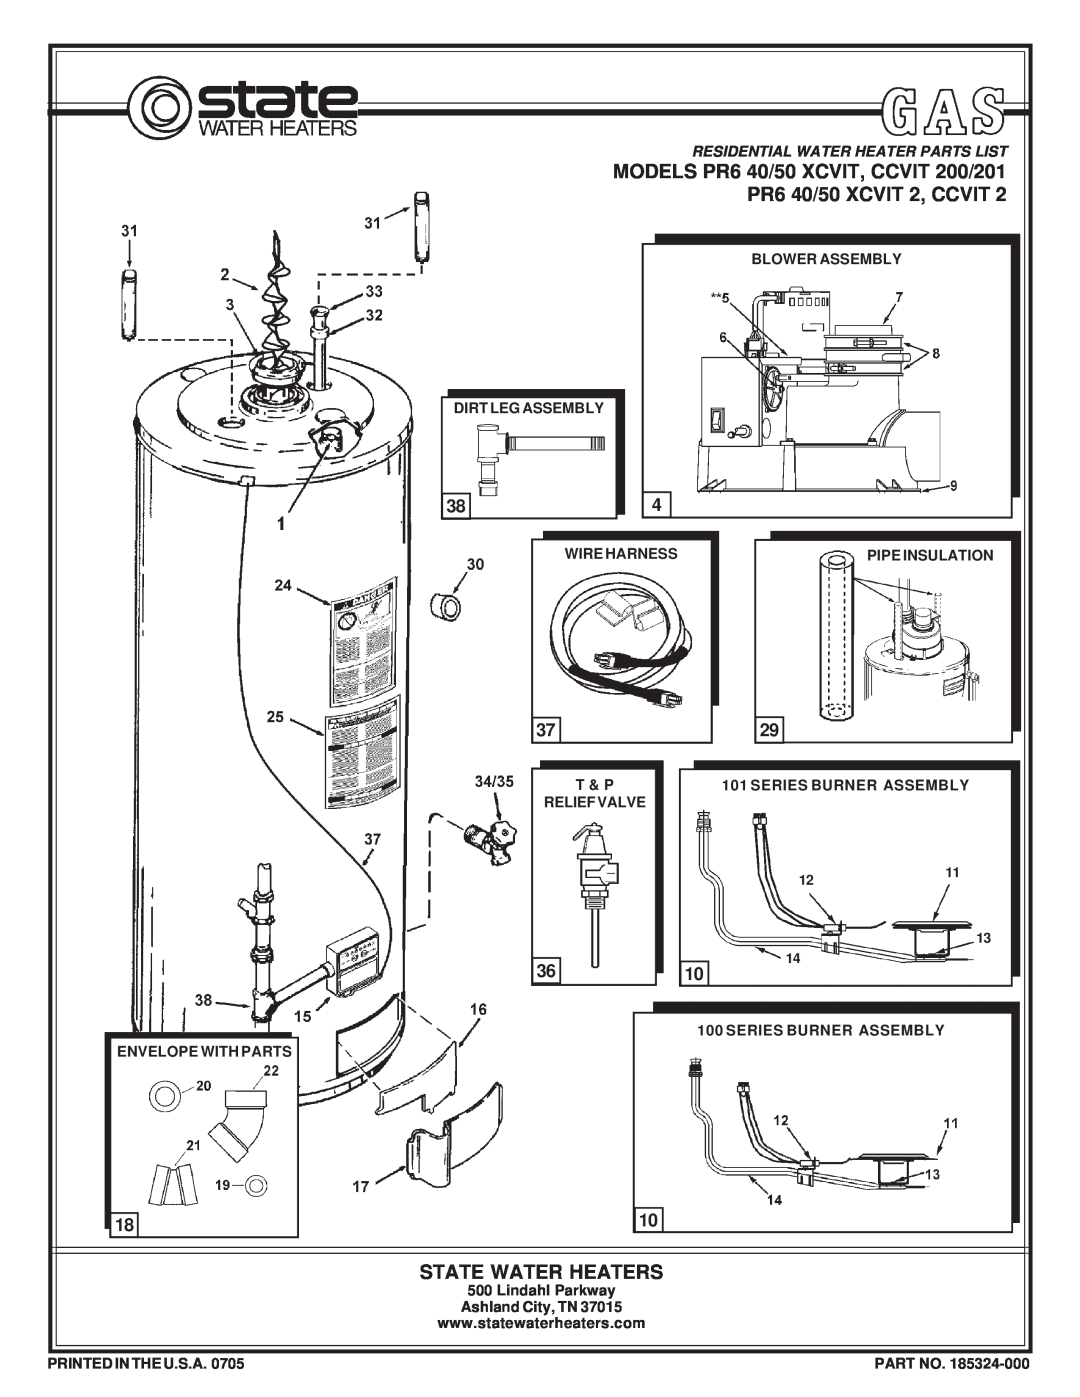 State Industries manual MODELS PR6 40/50 XCVIT, CCVIT 200/201 PR6 40/50 XCVIT 2, CCVIT, State Water Heaters 